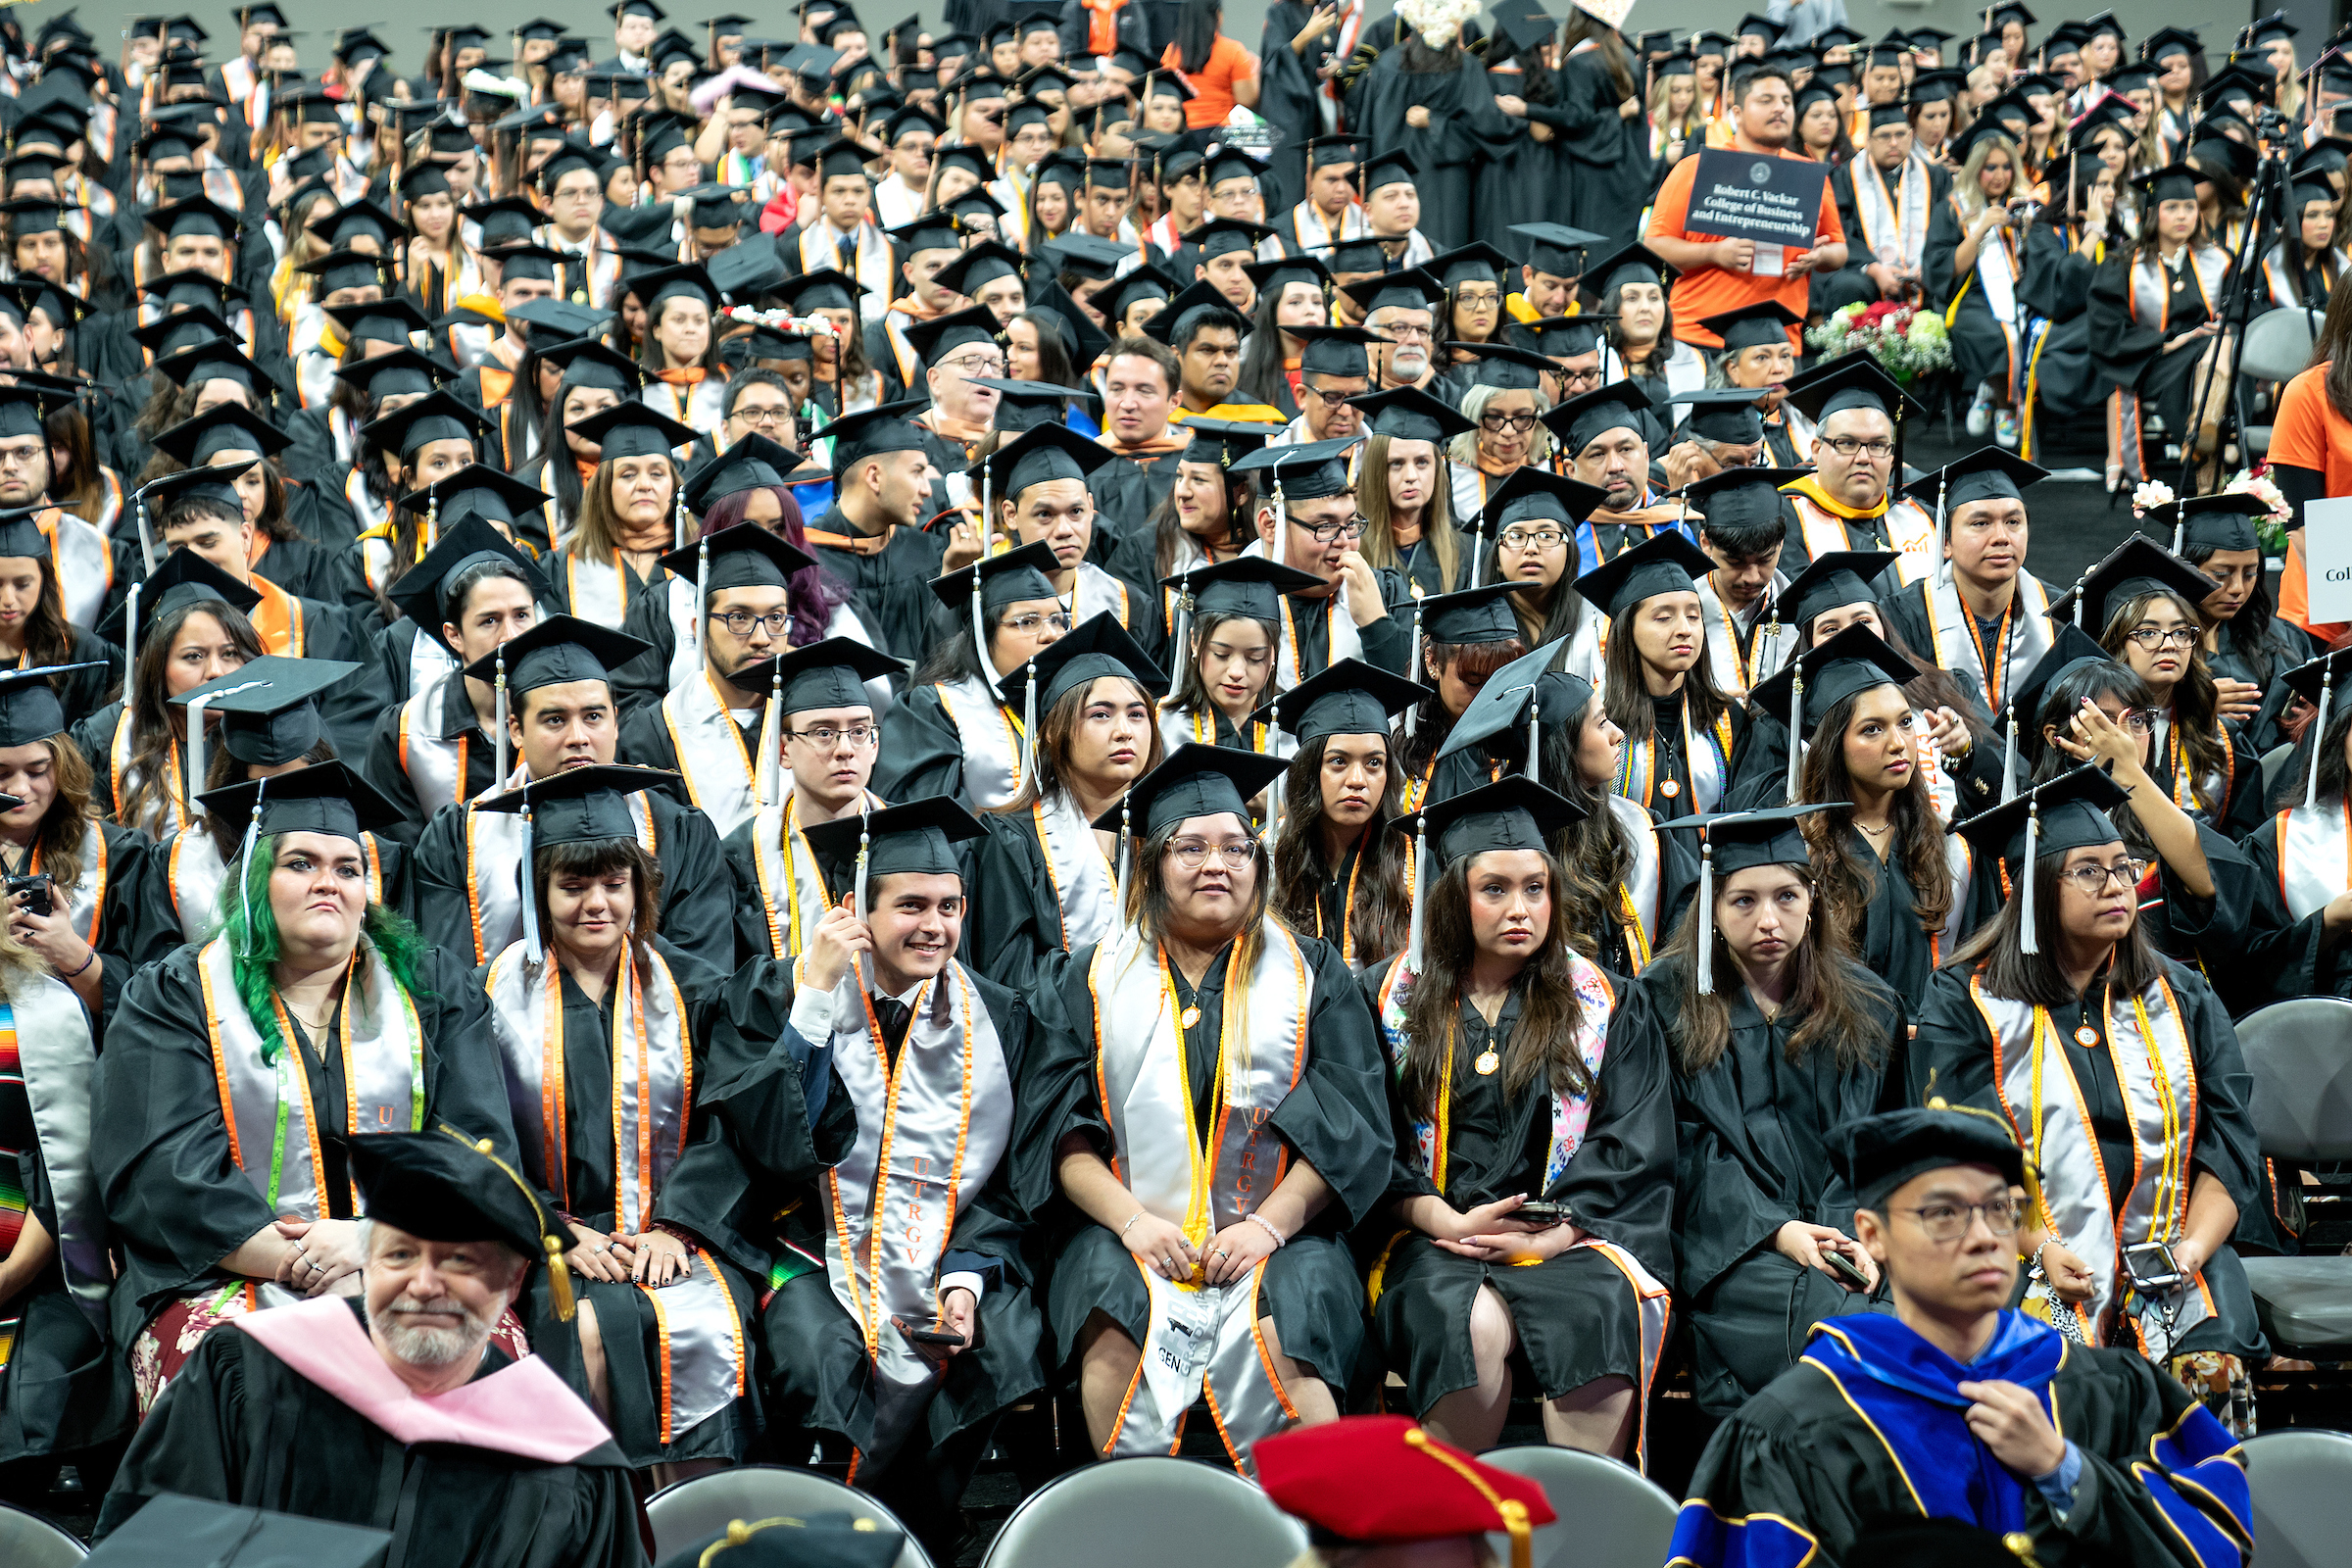 UTRGV graduating students